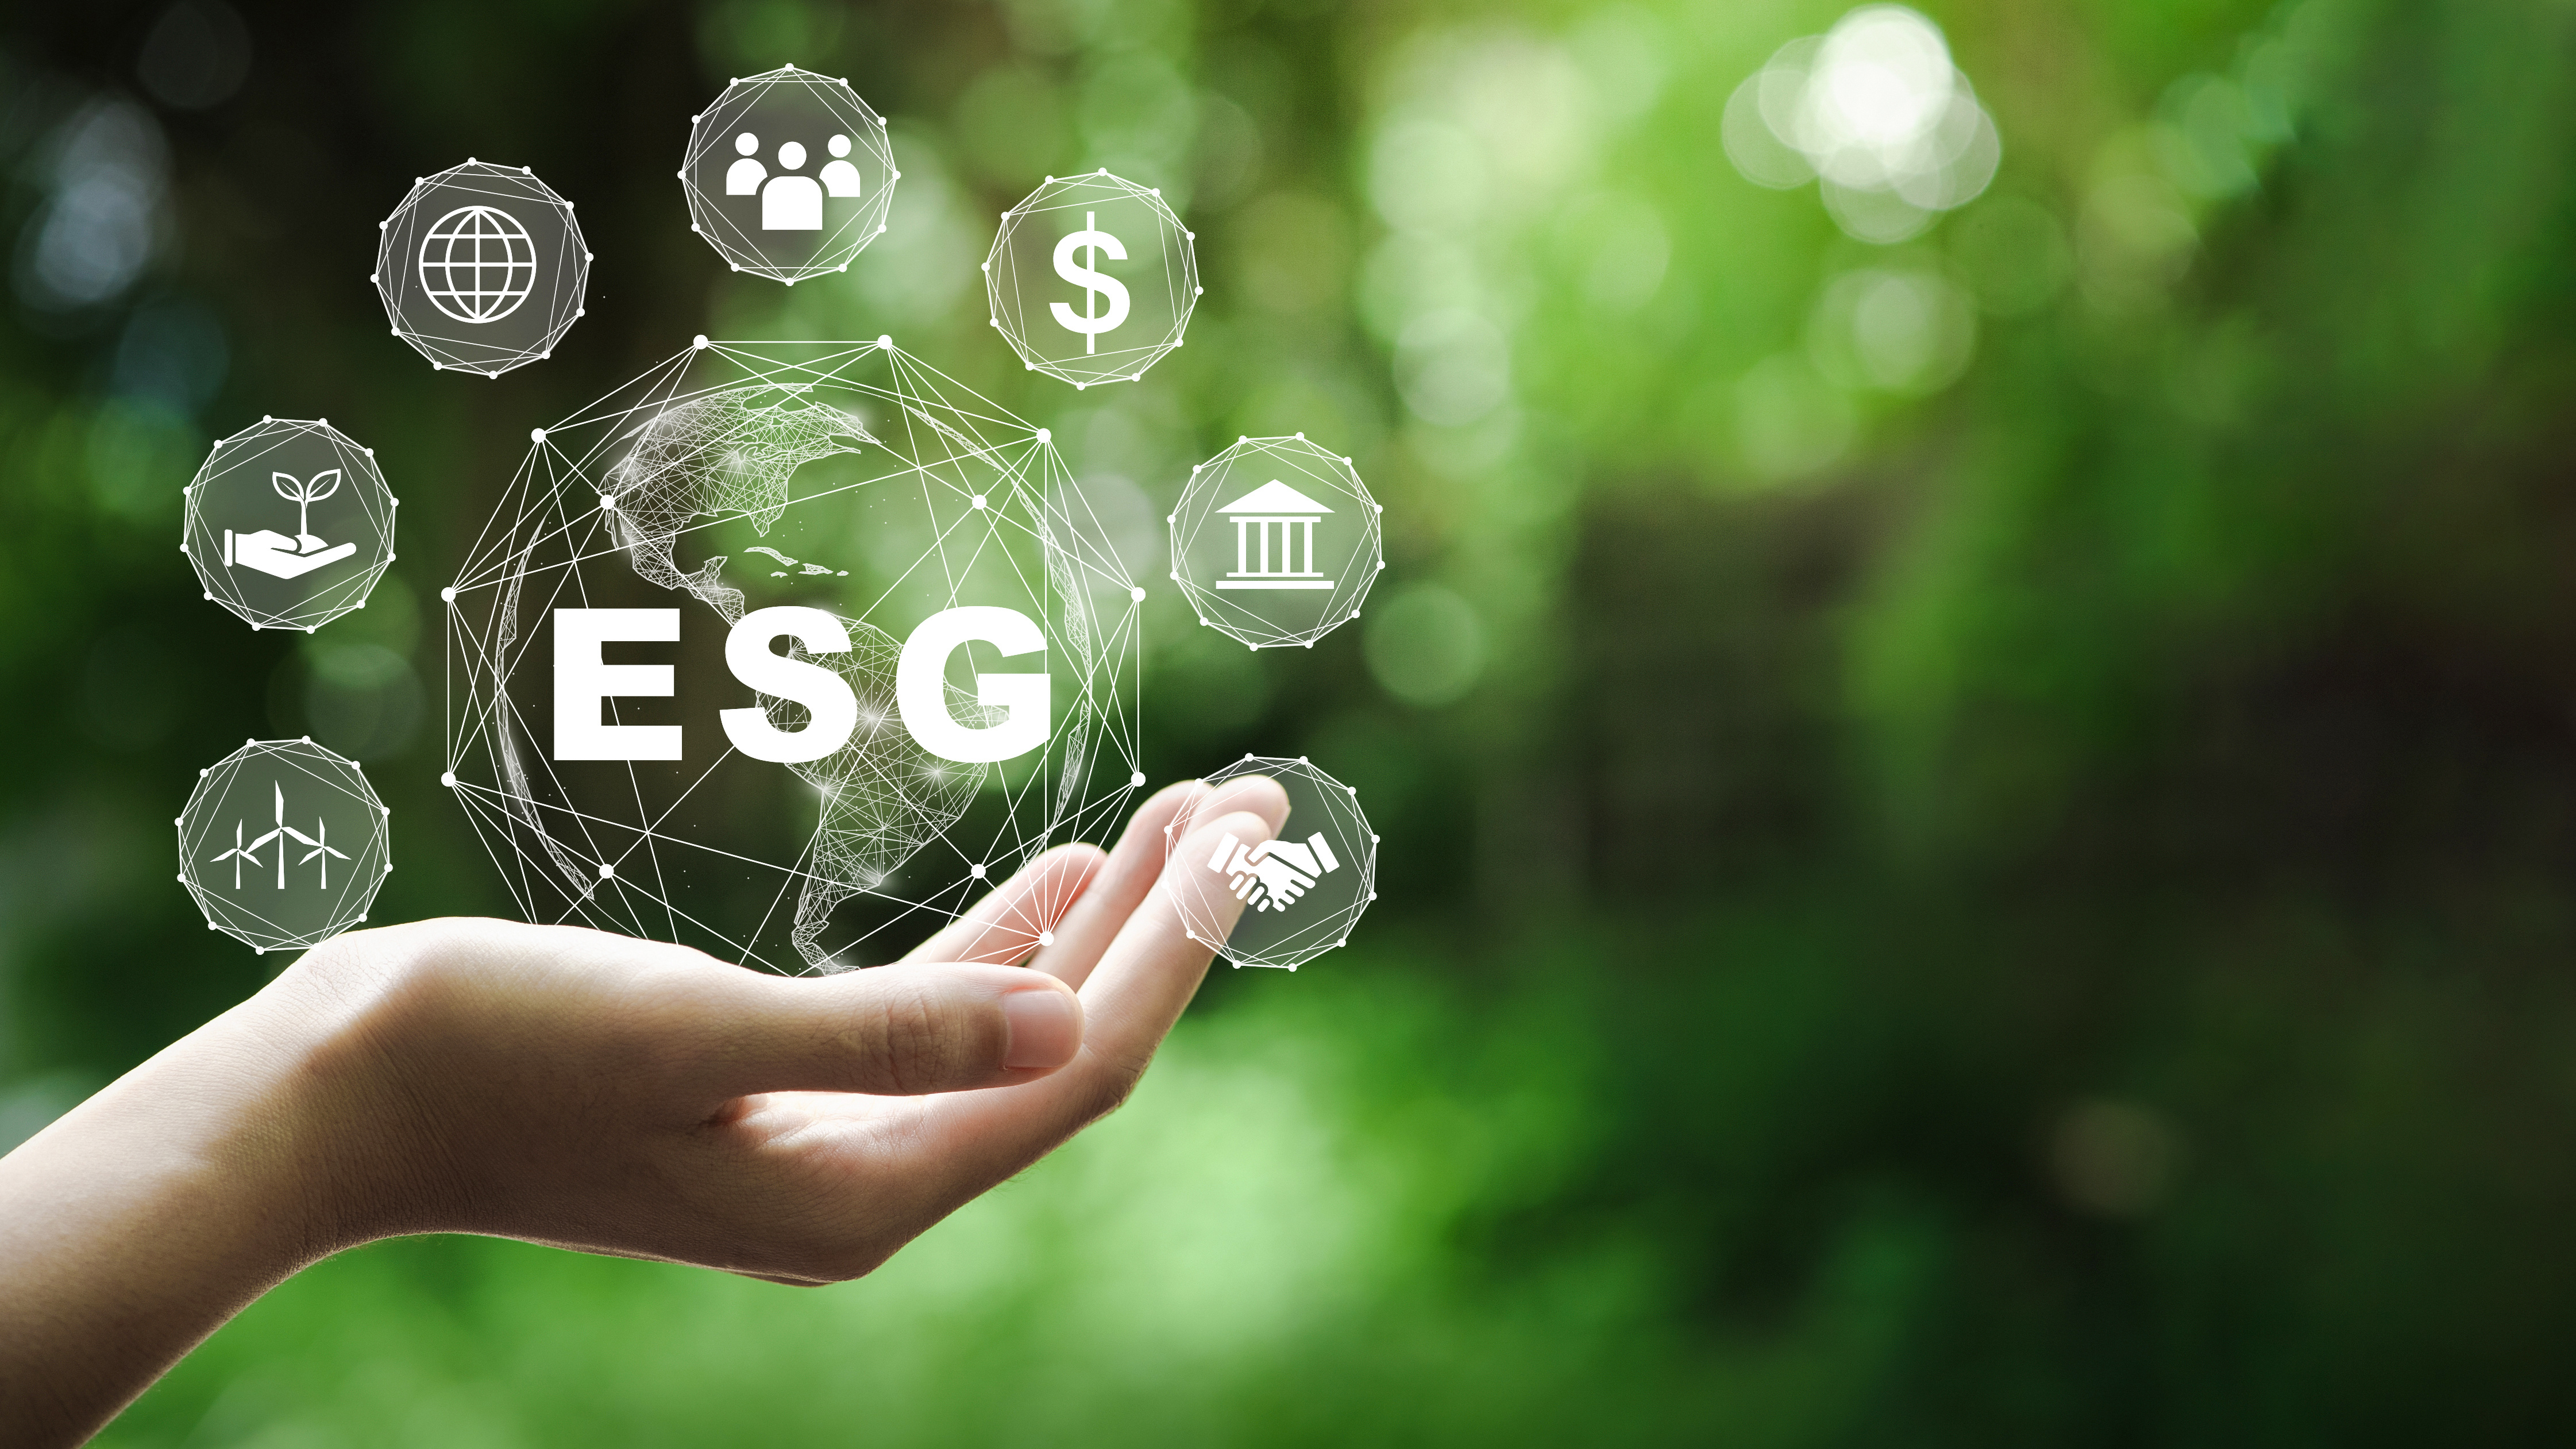 ESG - Environmental Social Governance issues